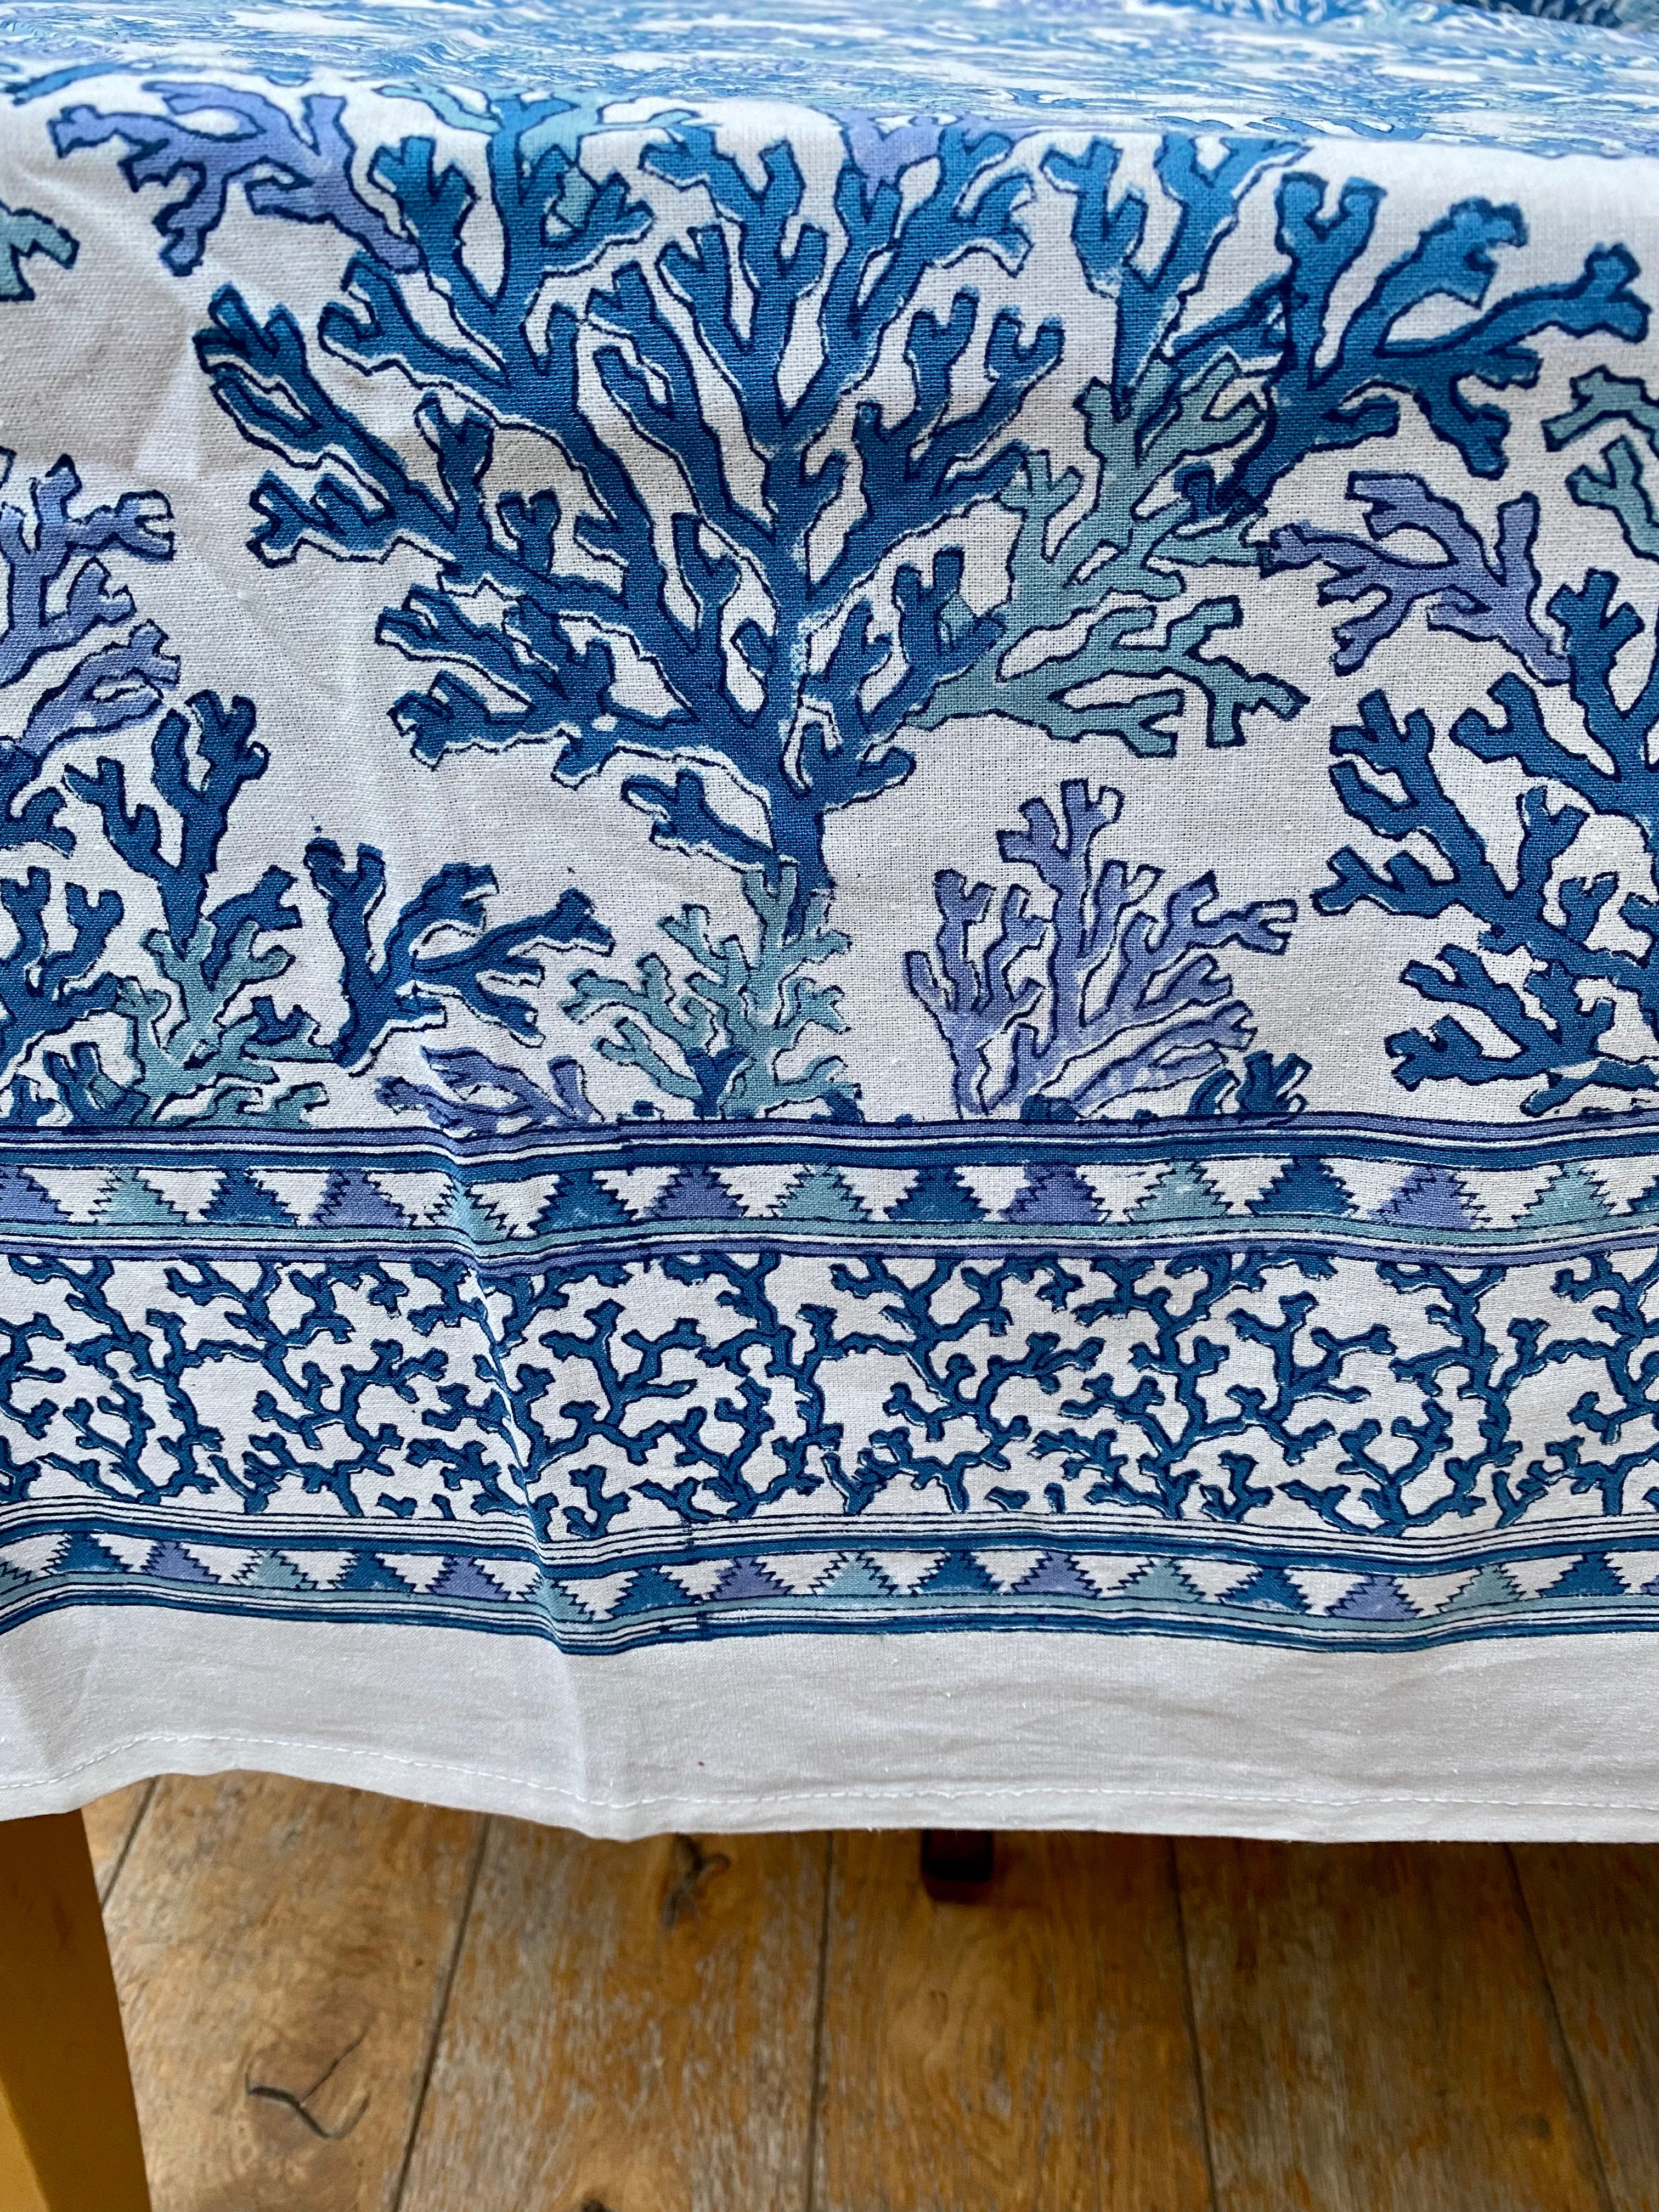 Wild Bazaar Portofino Tablecloth